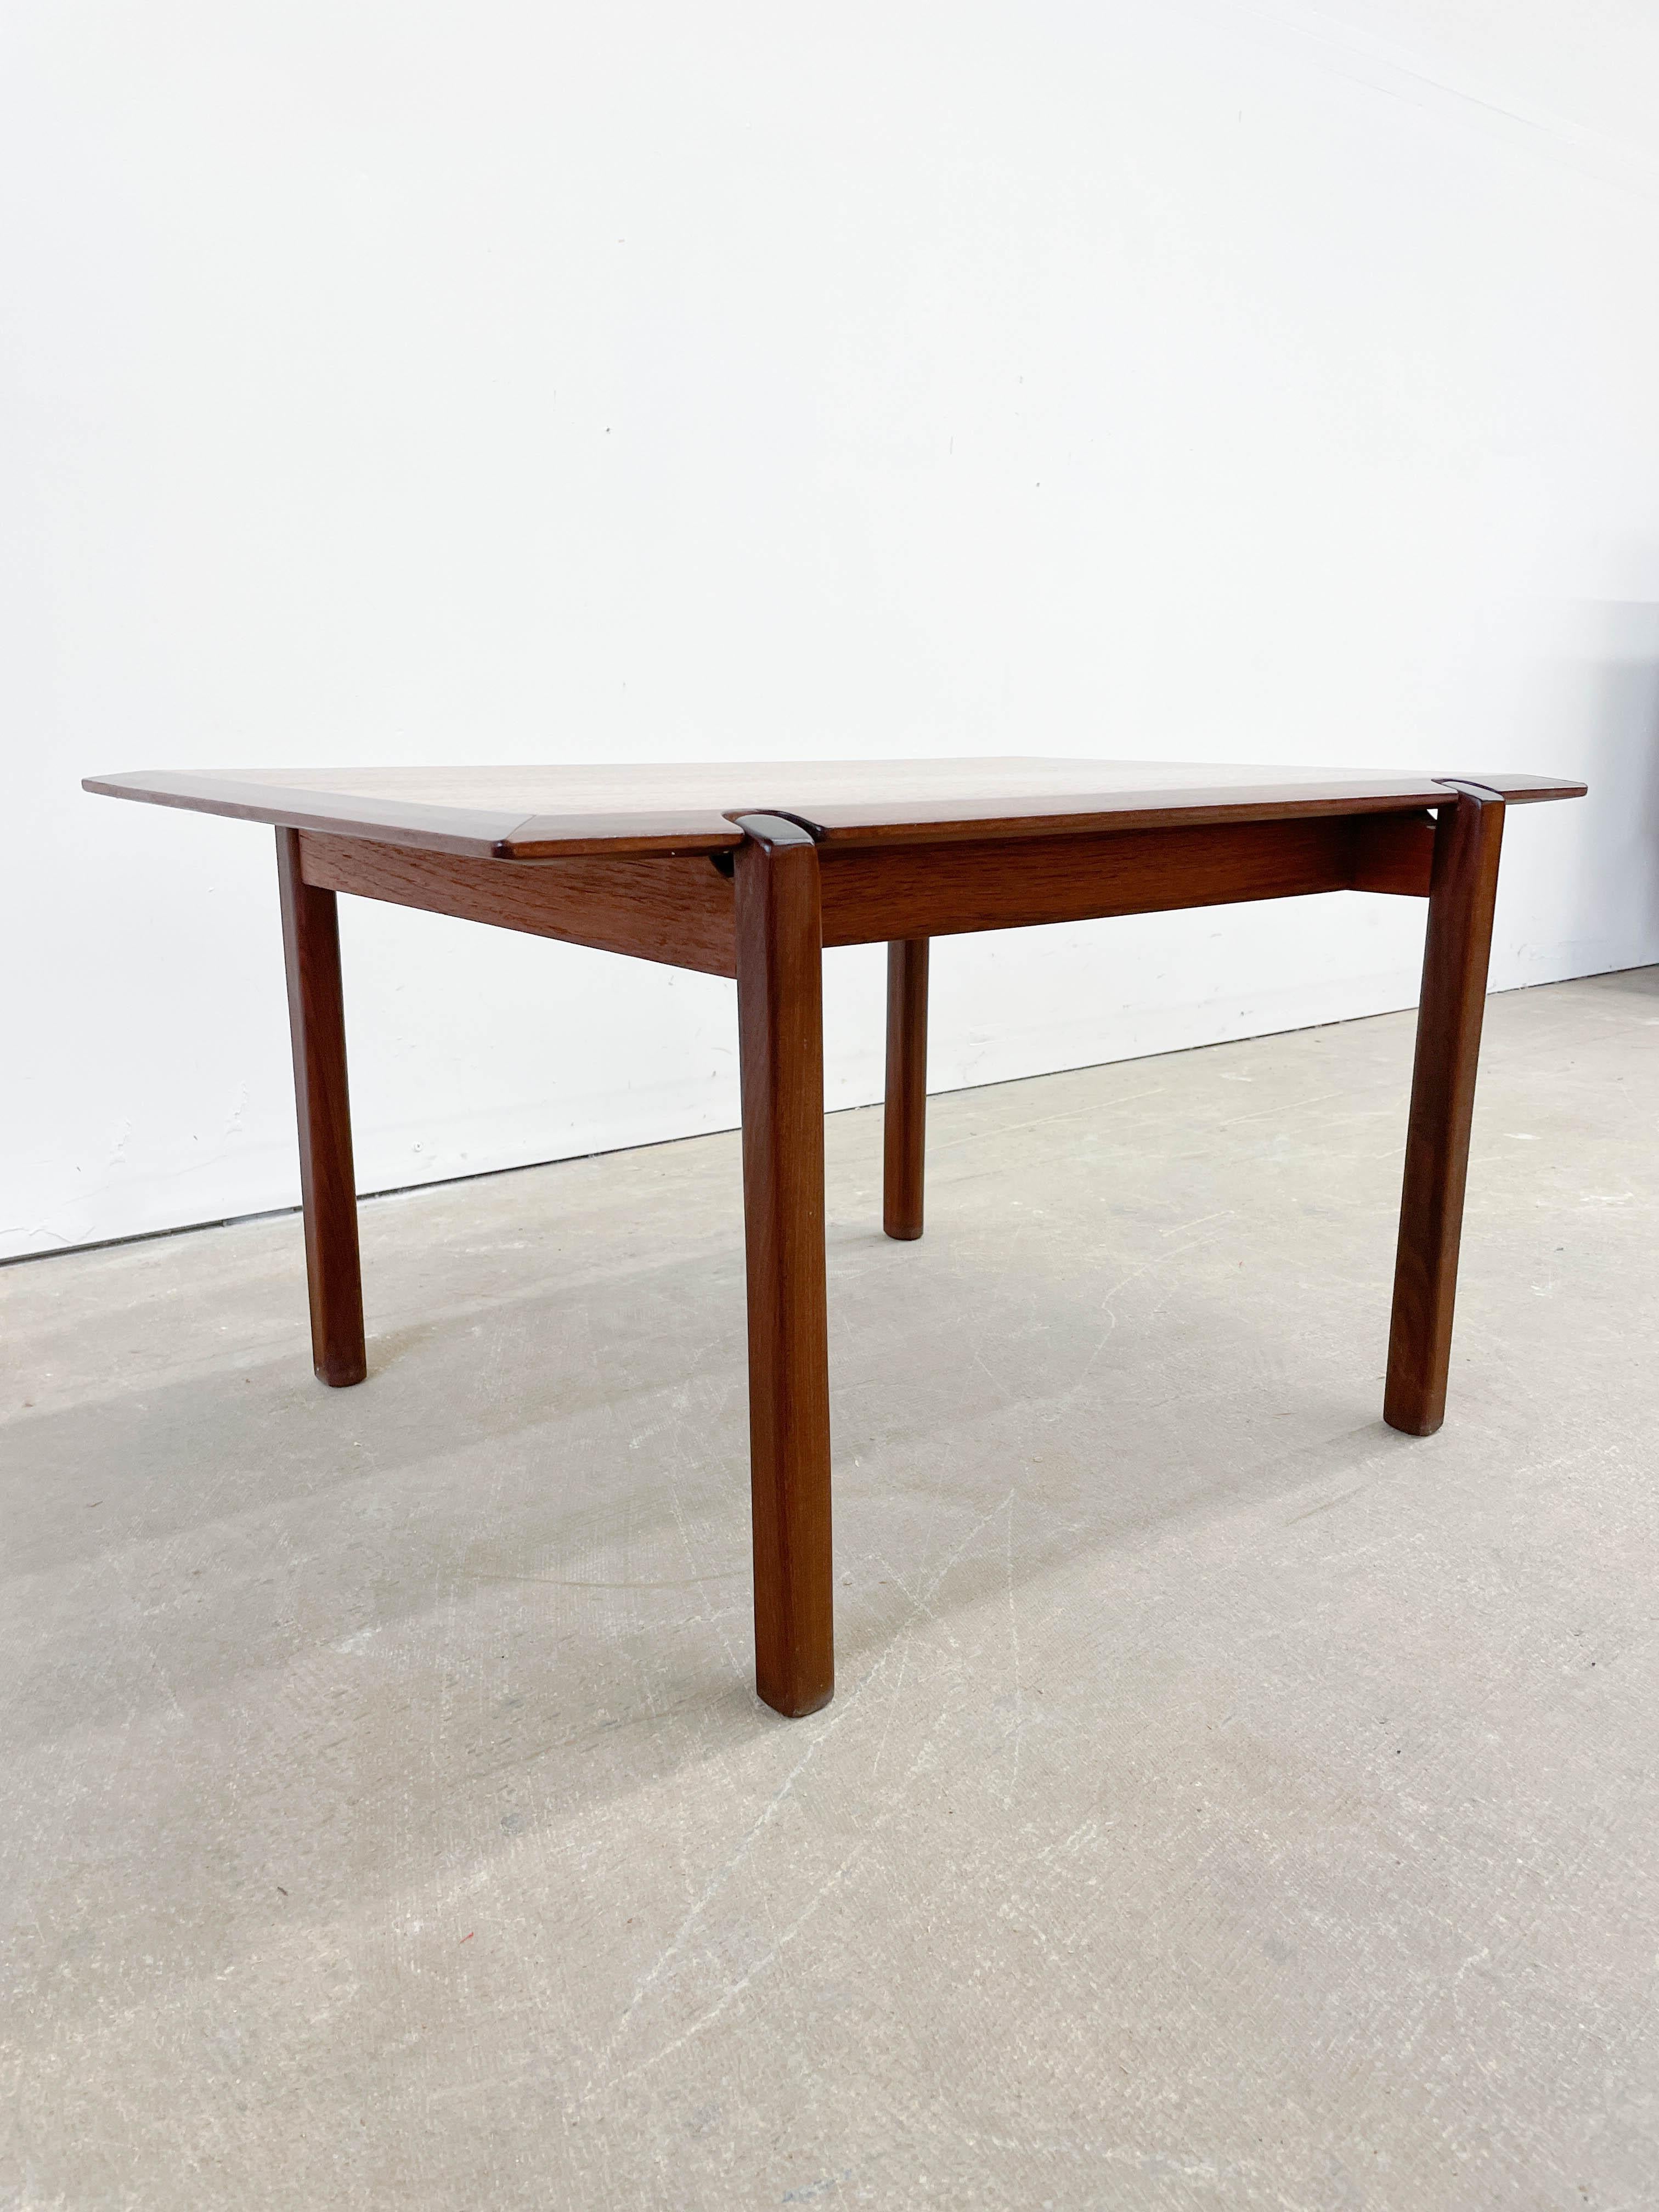 Mid-Century Modern Danish Teak Side Table with Beveled Edge